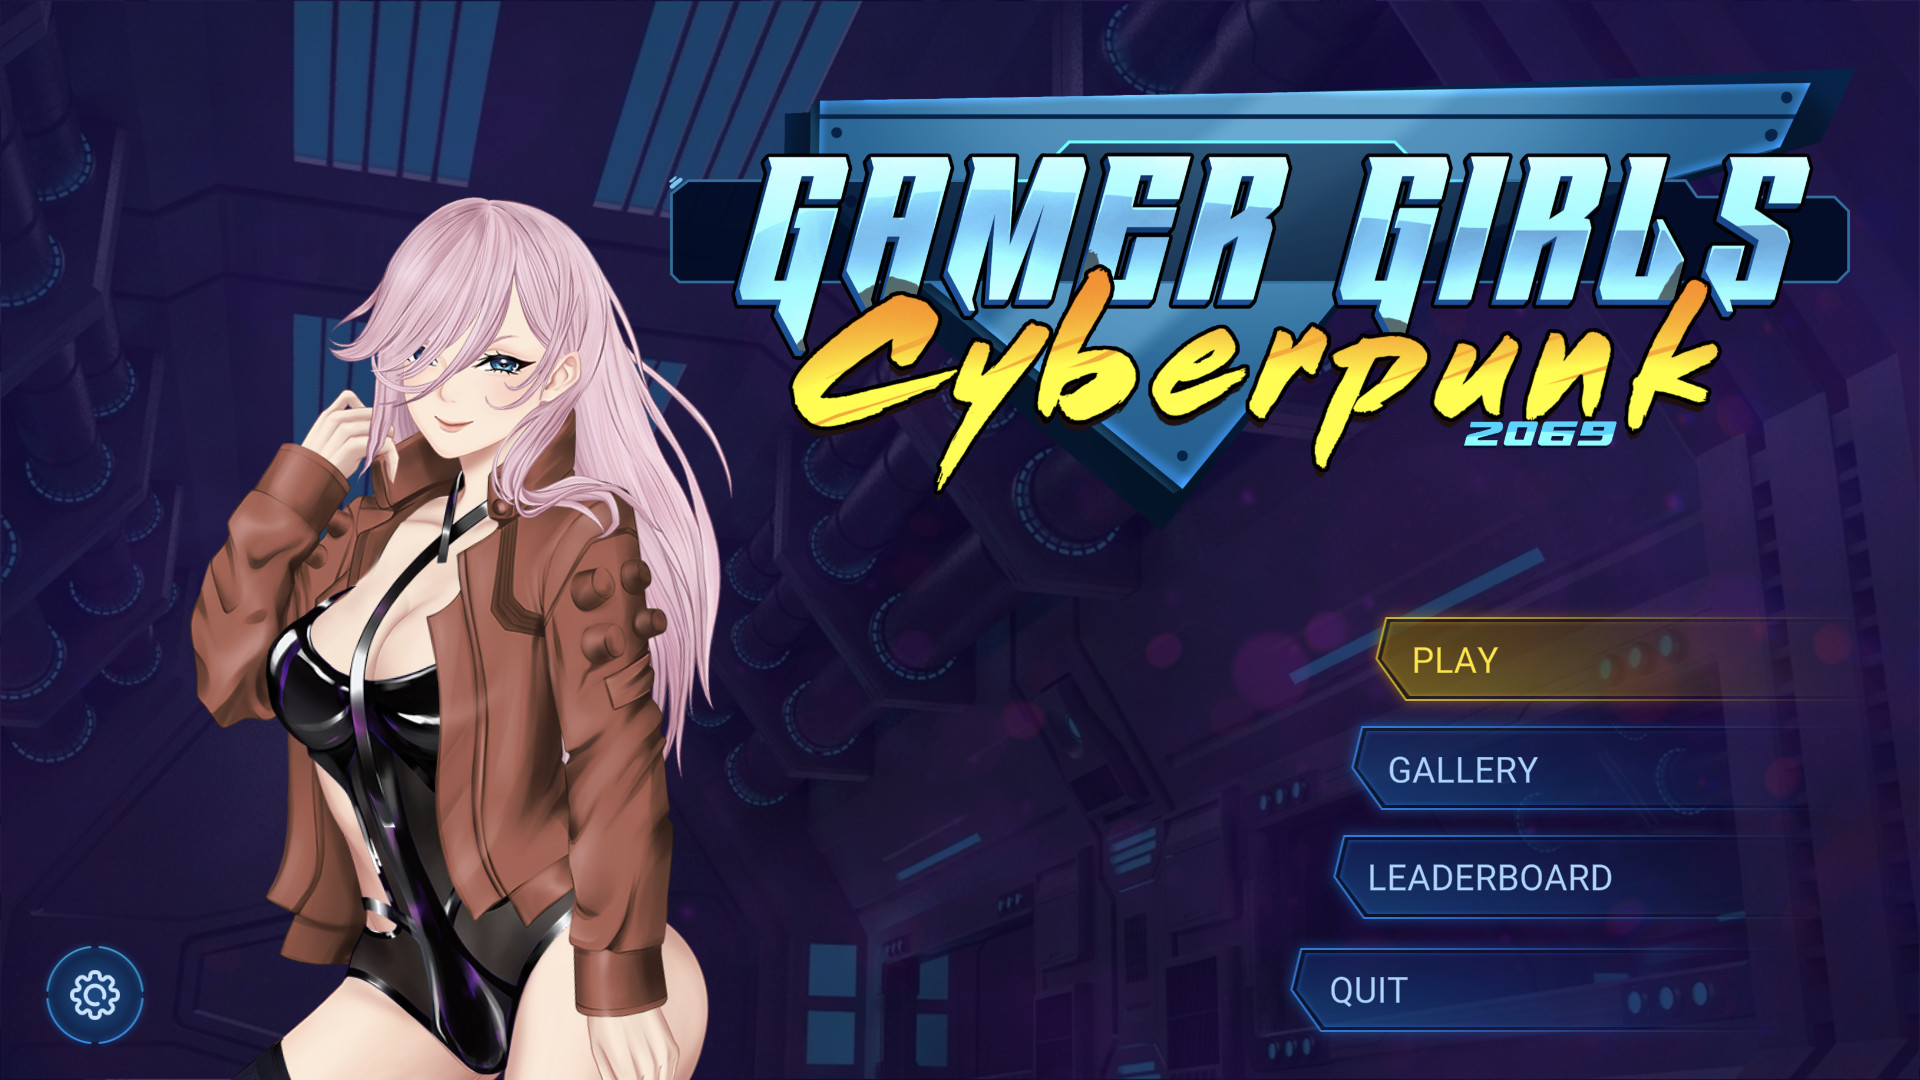 [$ 0.78] Gamer Girls: Cyberpunk 2069 Steam CD Key